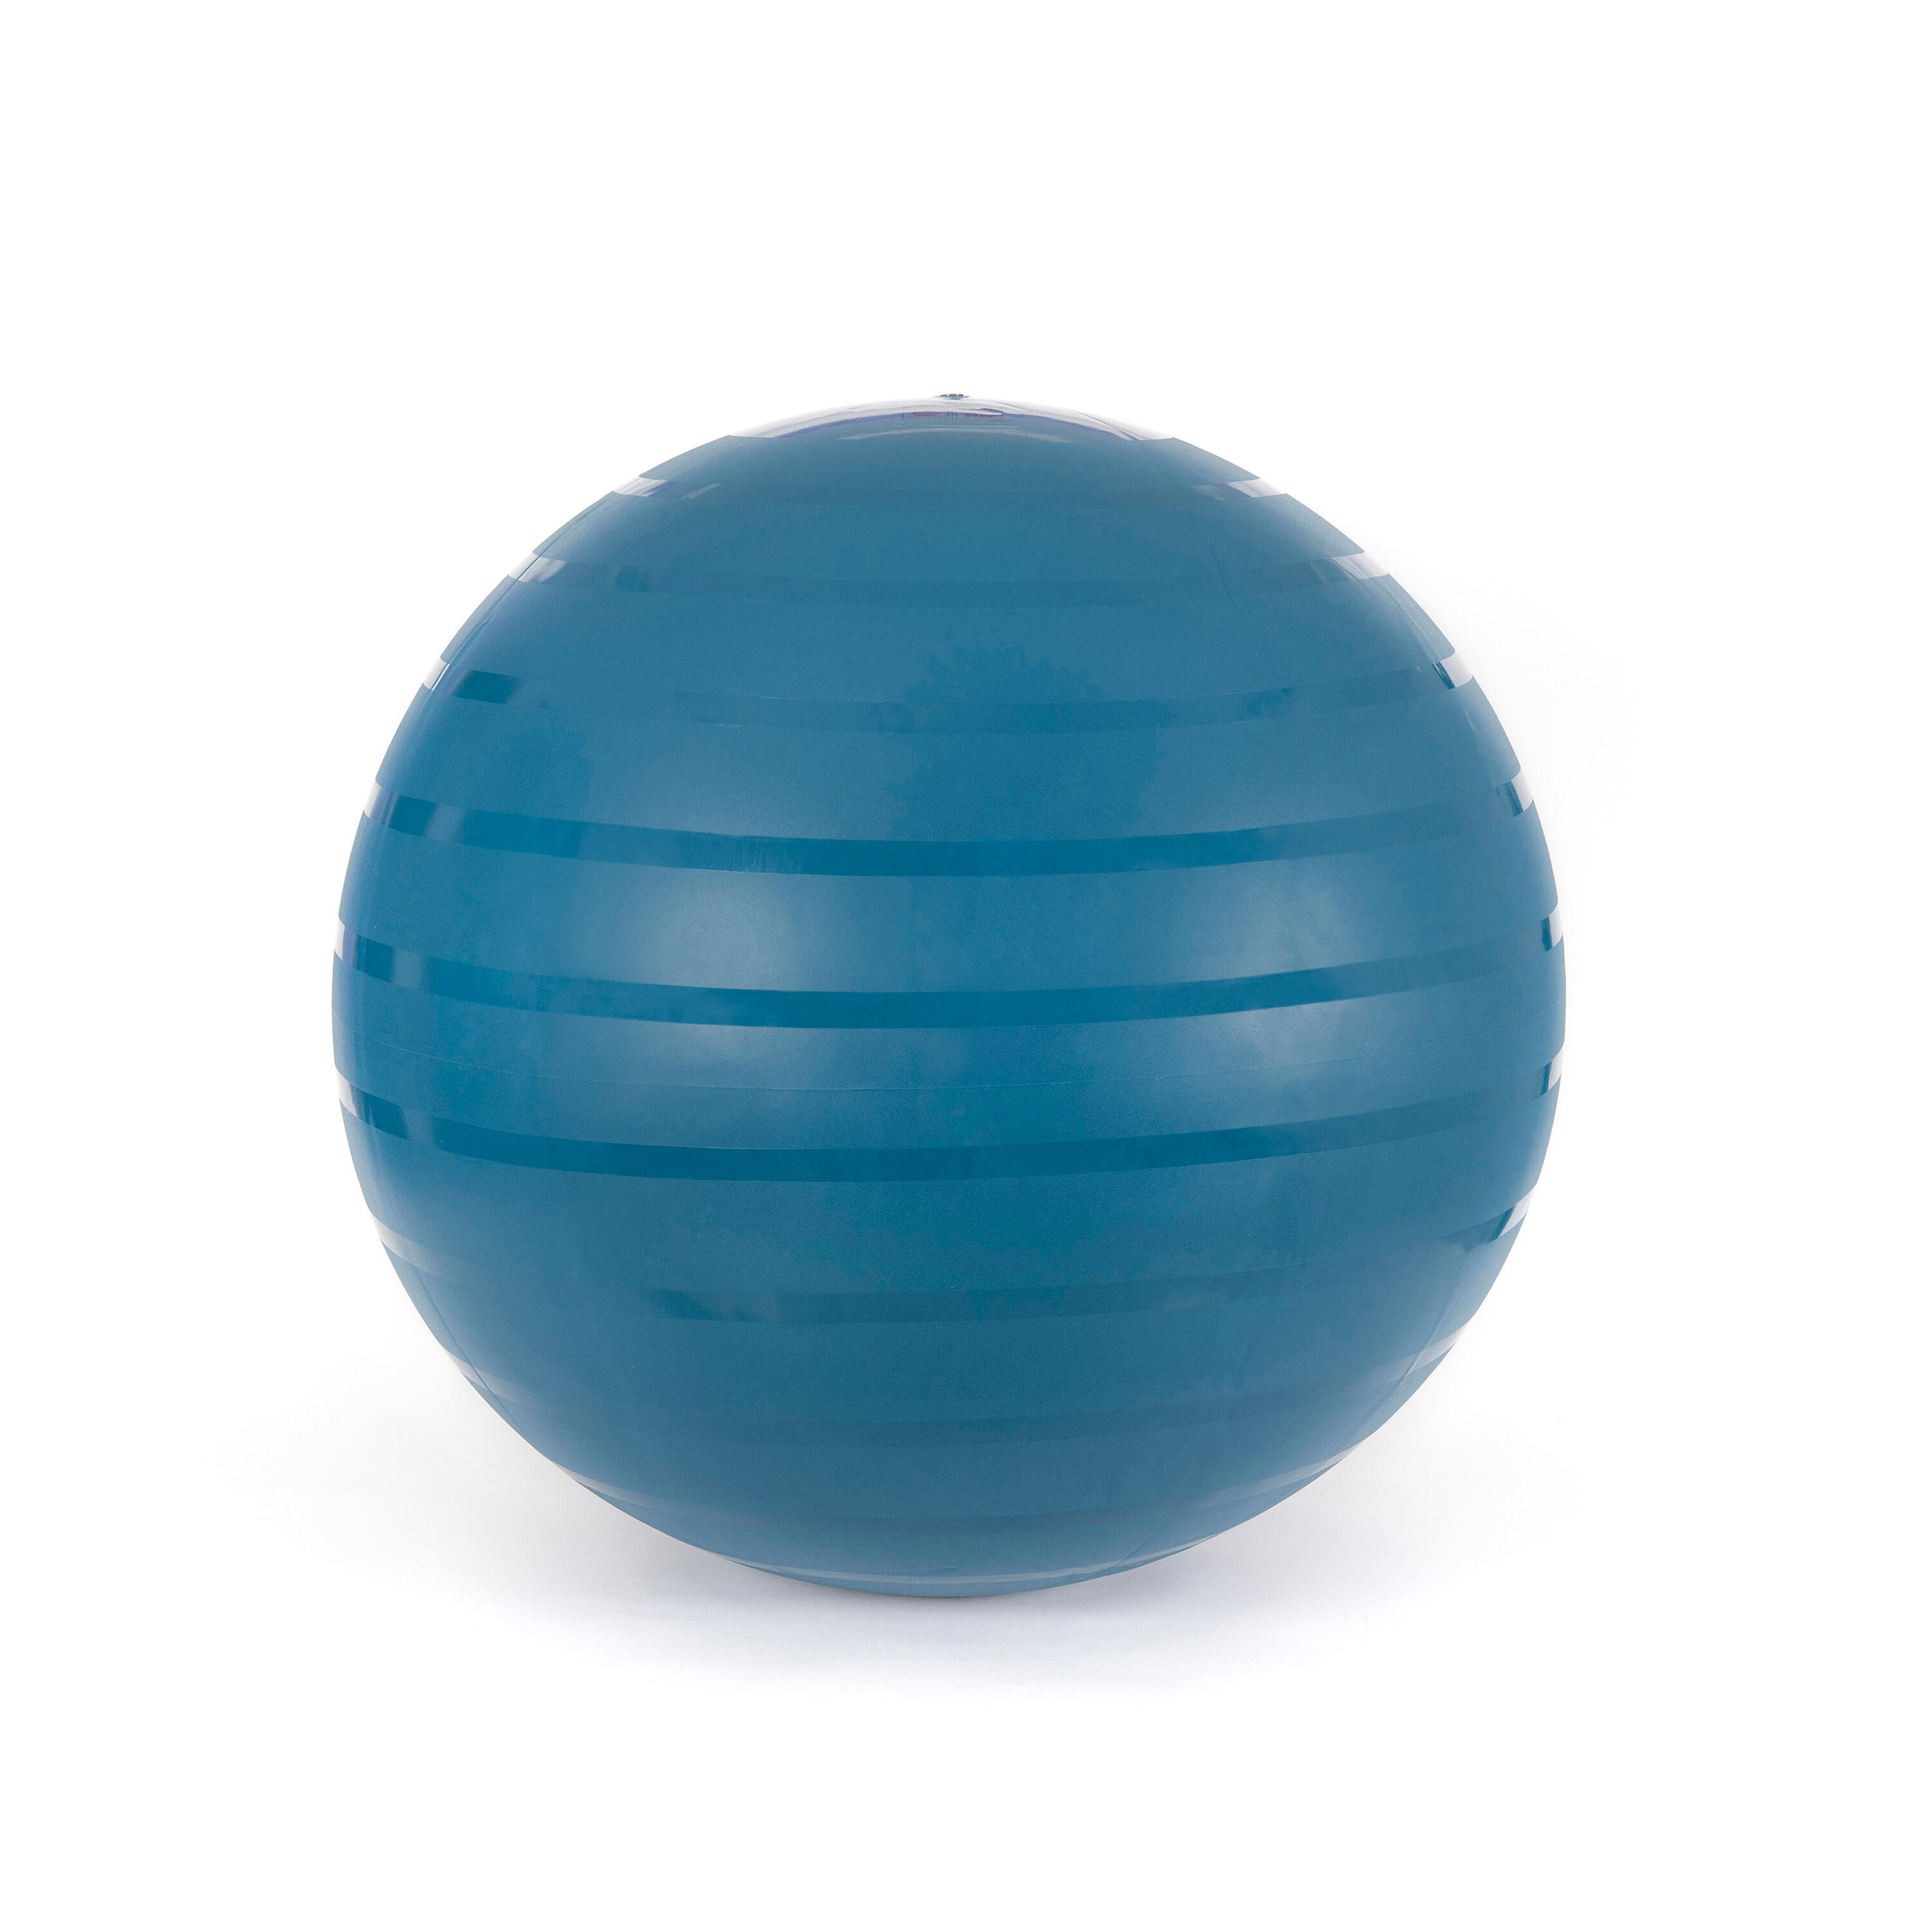 Size 2 (65 cm) Pilates Swiss Ball - Blue - DOMYOS